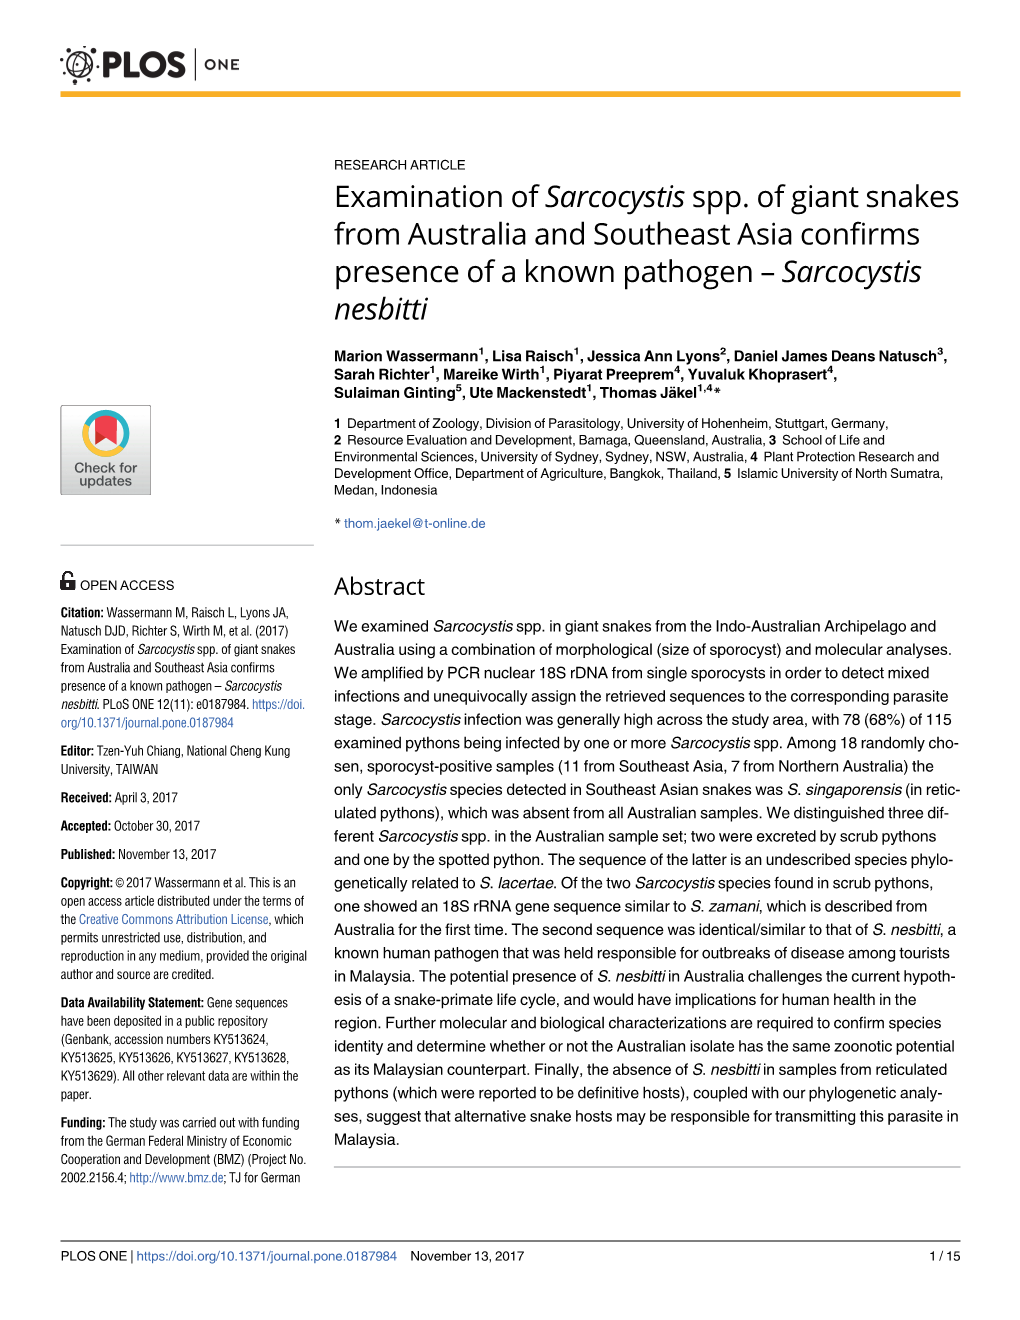 Examination of Sarcocystis Spp. of Giant Snakes from Australia and Southeast Asia Confirms Presence of a Known Pathogen – Sarcocystis Nesbitti